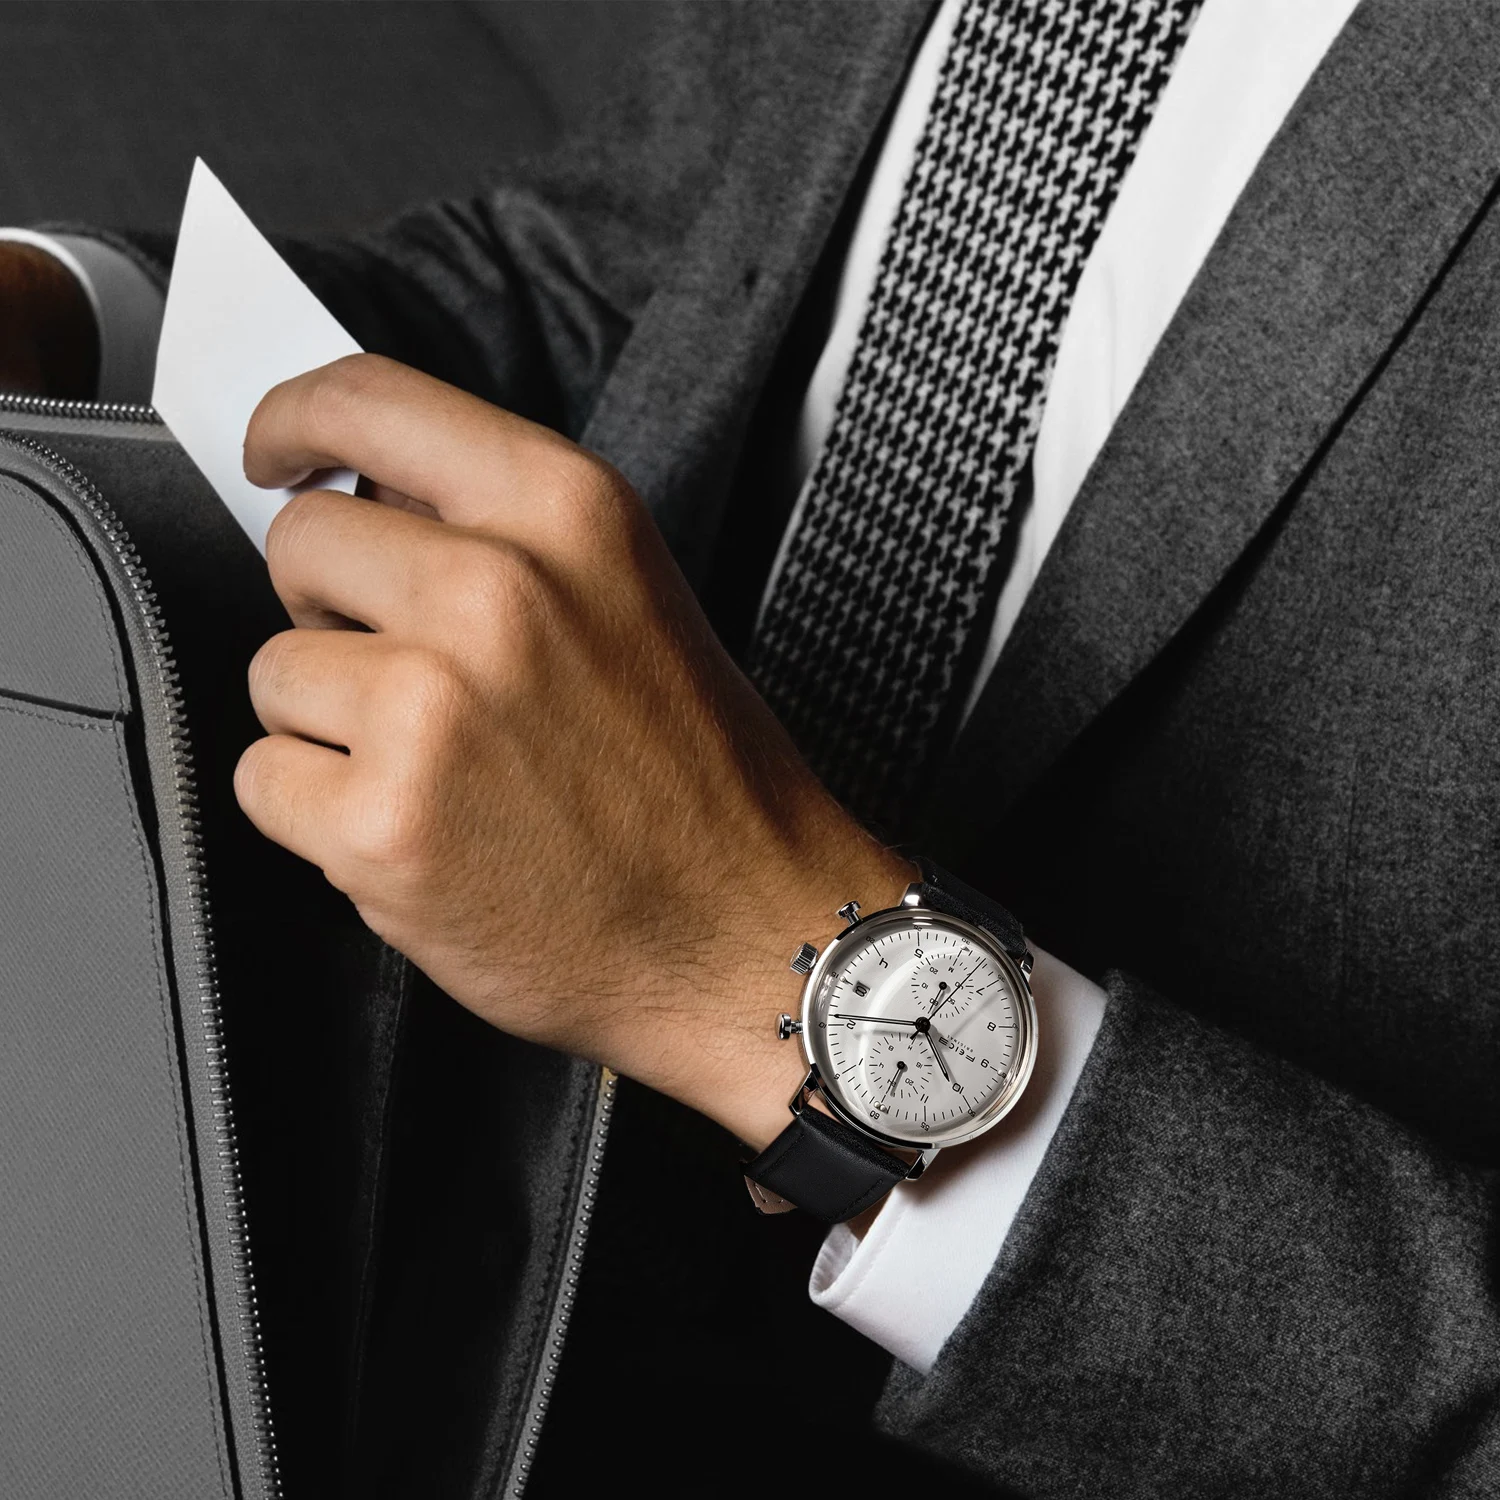 FEICE Quartz Wrist Watch for Men Dual Time Display Business Analog Watches Men's Wristwatch Clock Men Luxury Casual Sports Watch